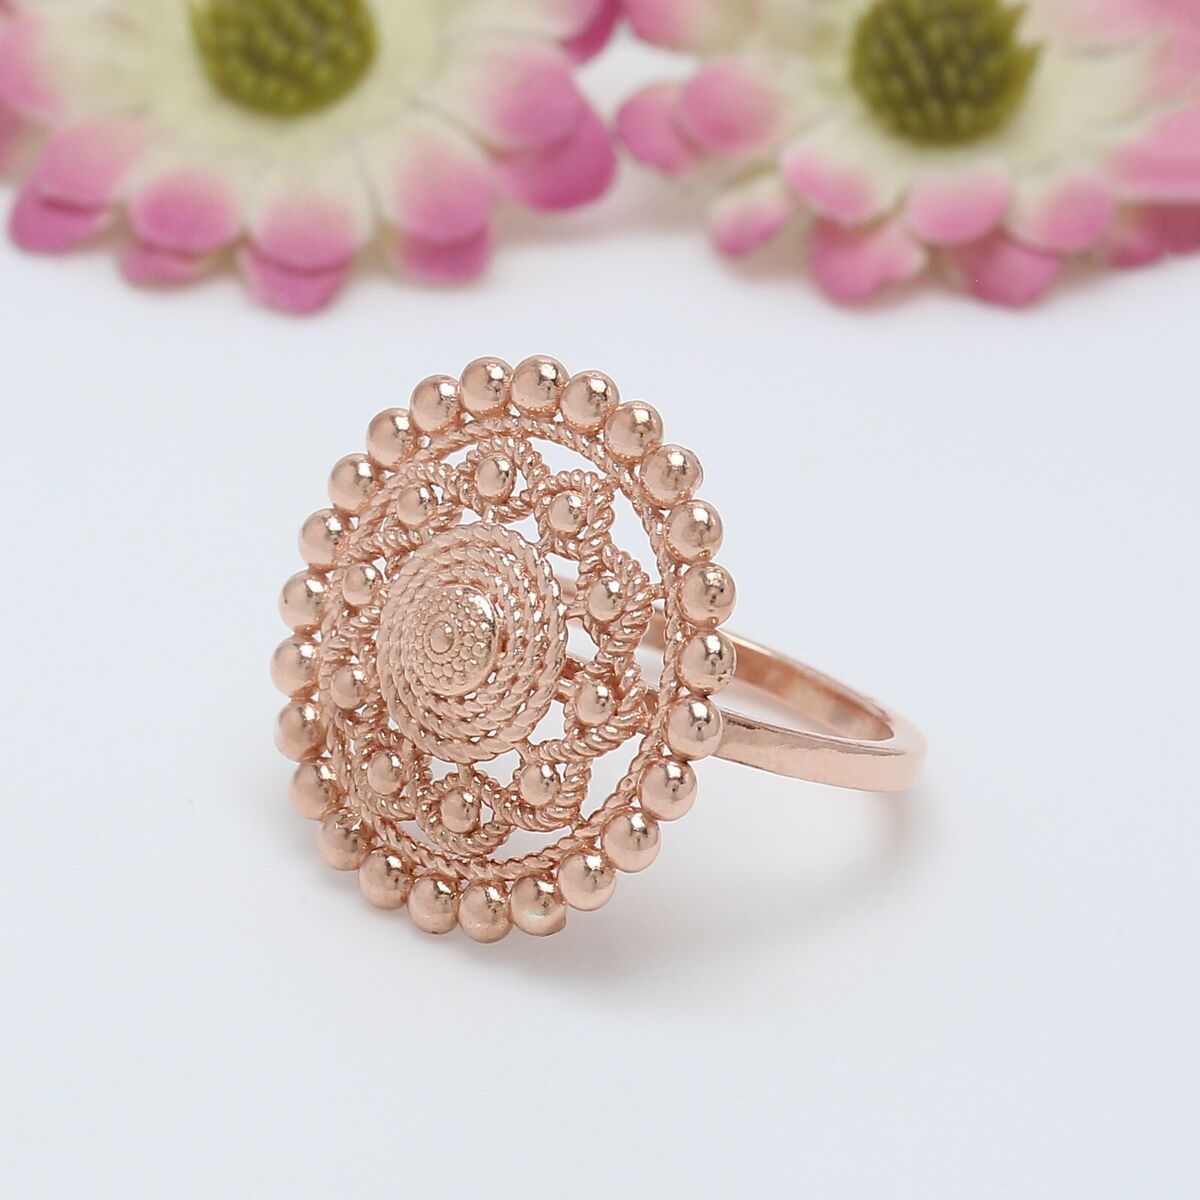 Attractive Gold Umbrella Ring